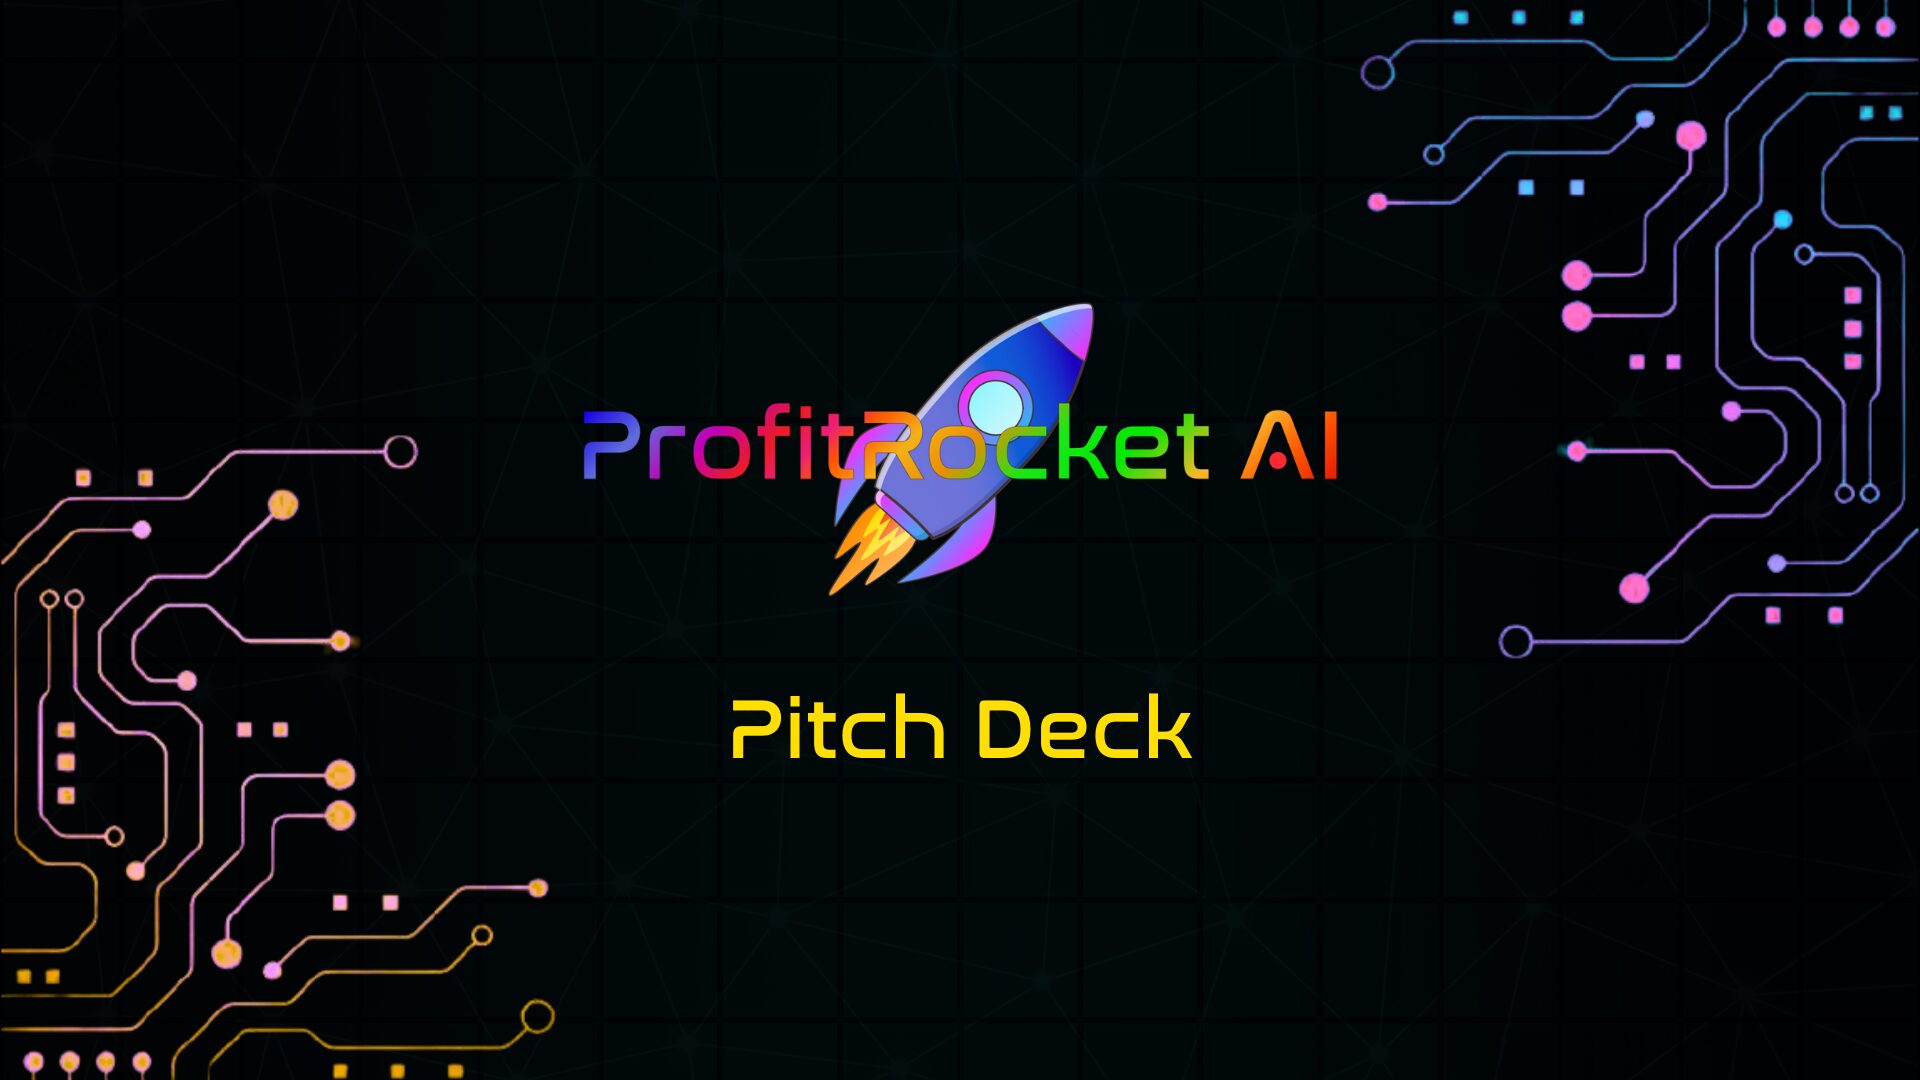 ProfitRocket AI Pitch Deck Page 1 Pitch Deck